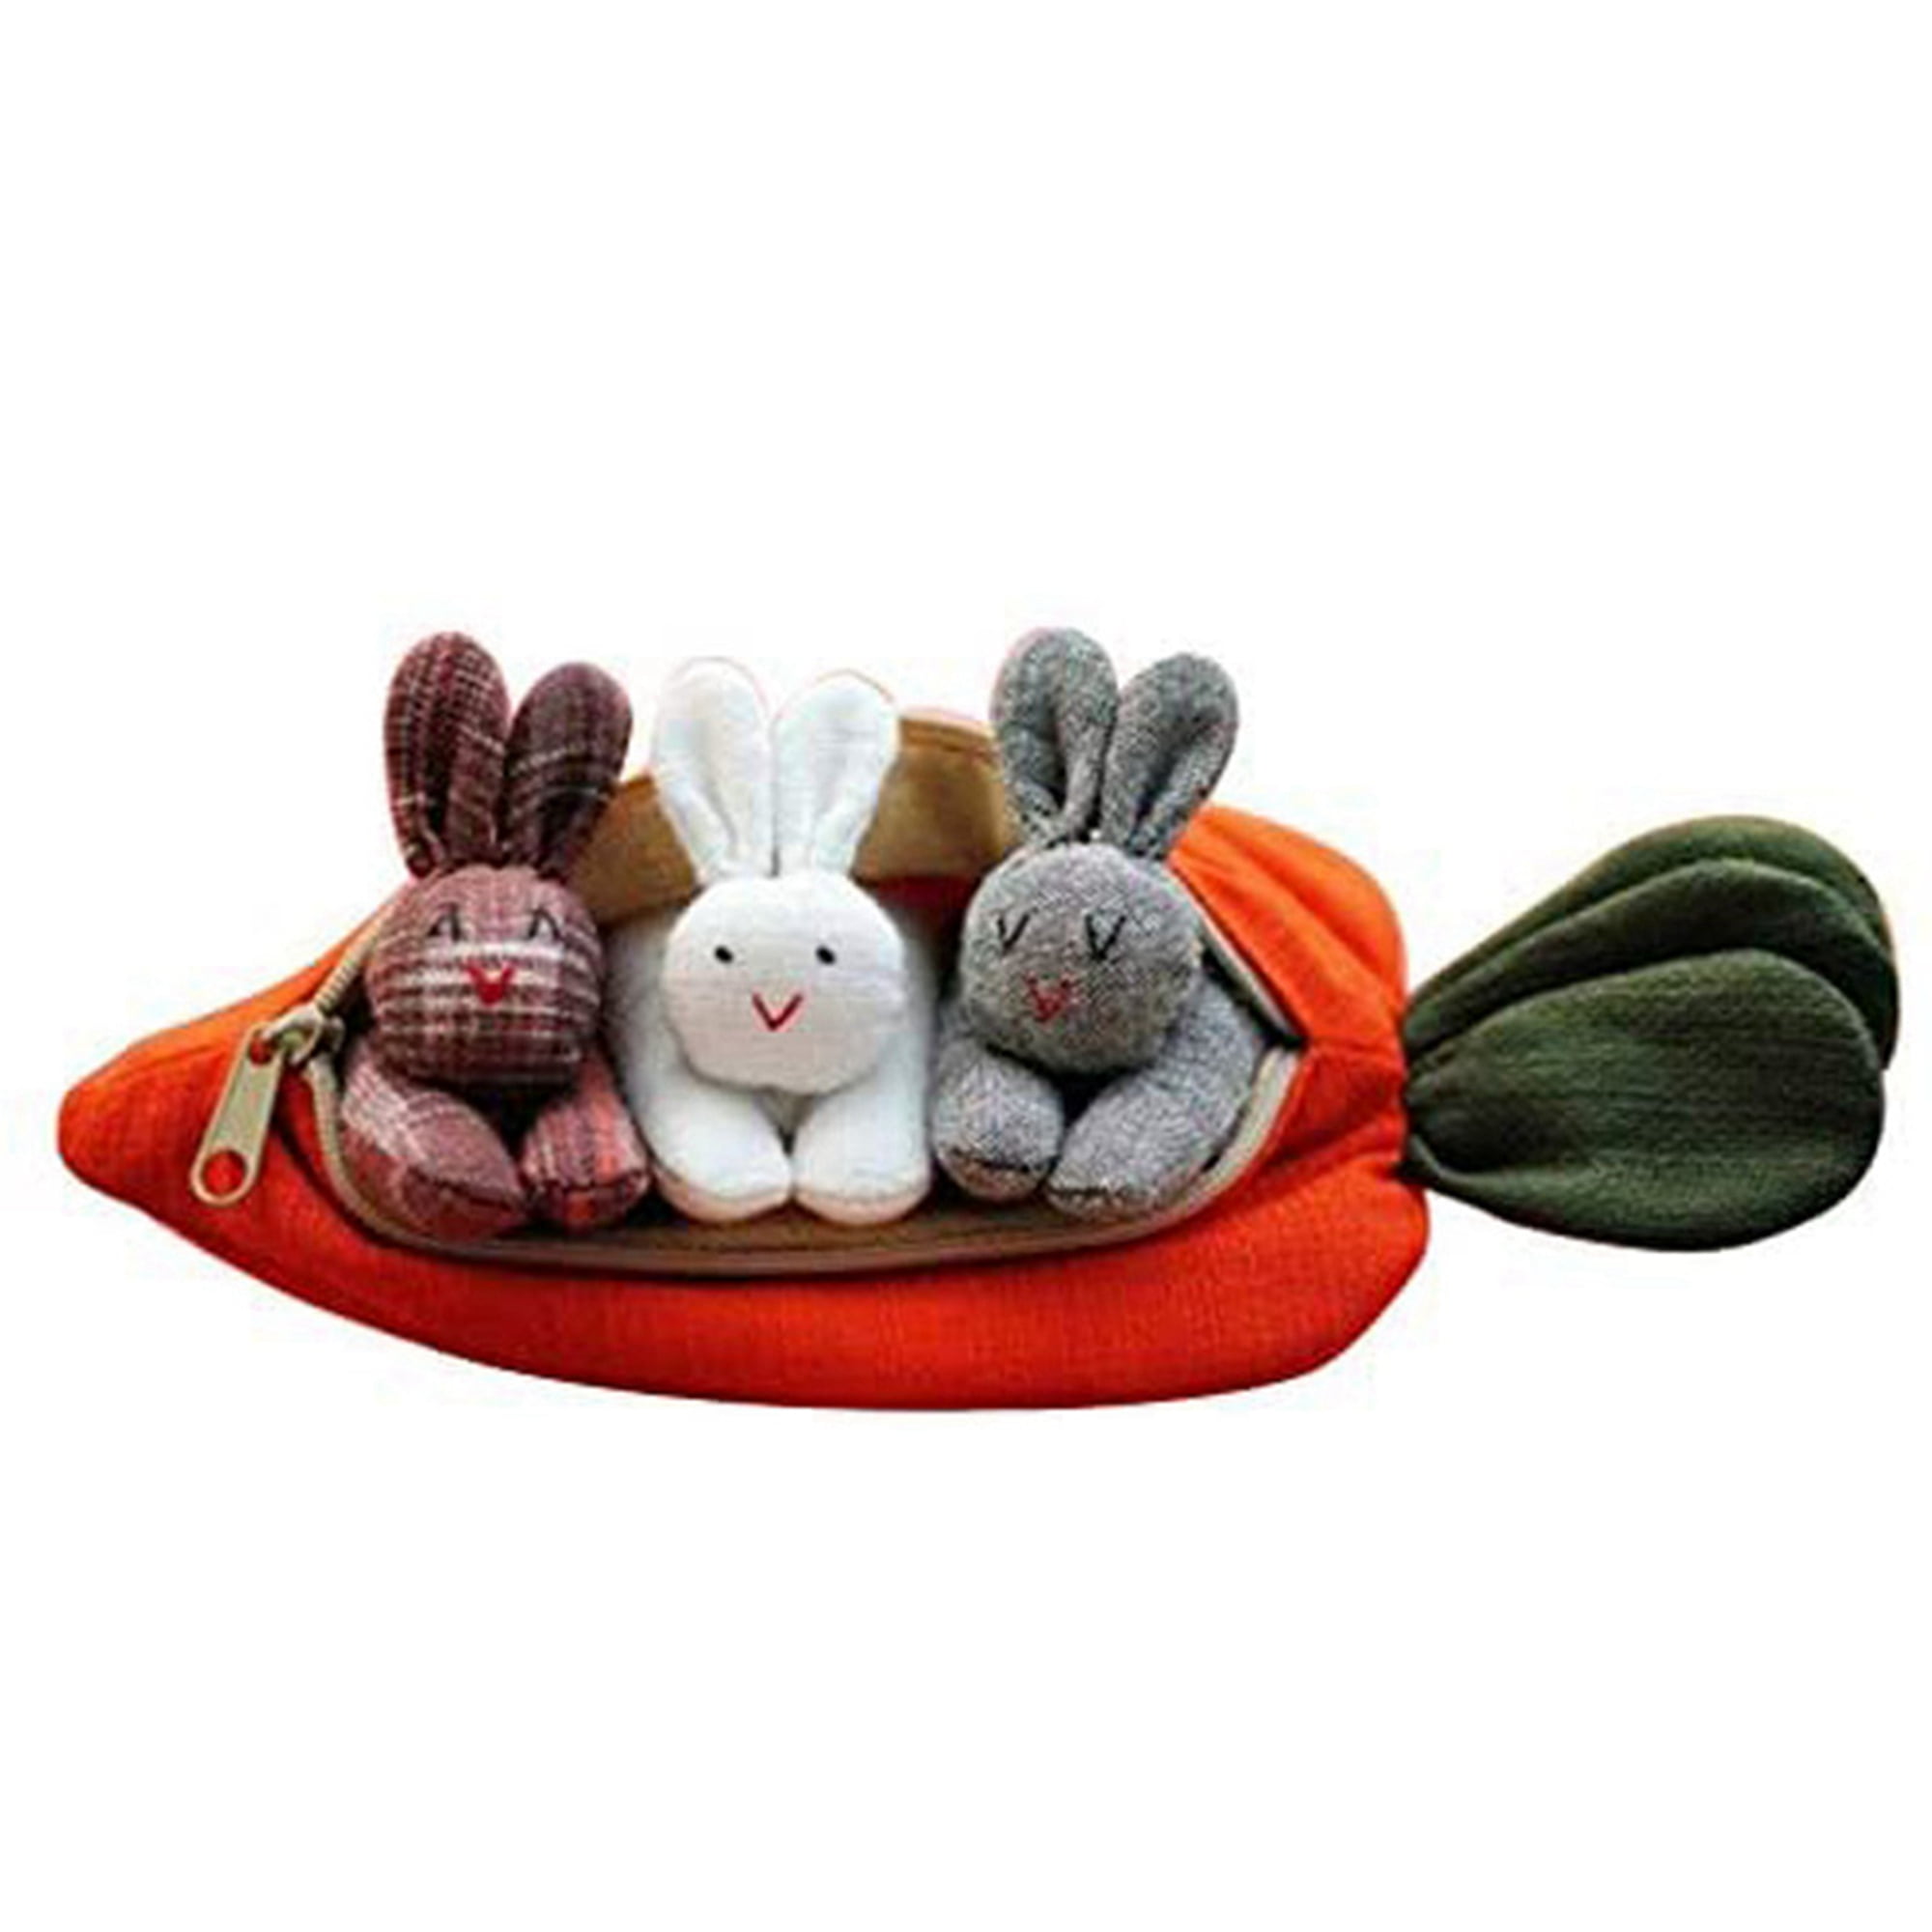 Original Winnie the Pooh Rabbit Plush Doll Soft Stuffed Toy Hare Gift 12" 